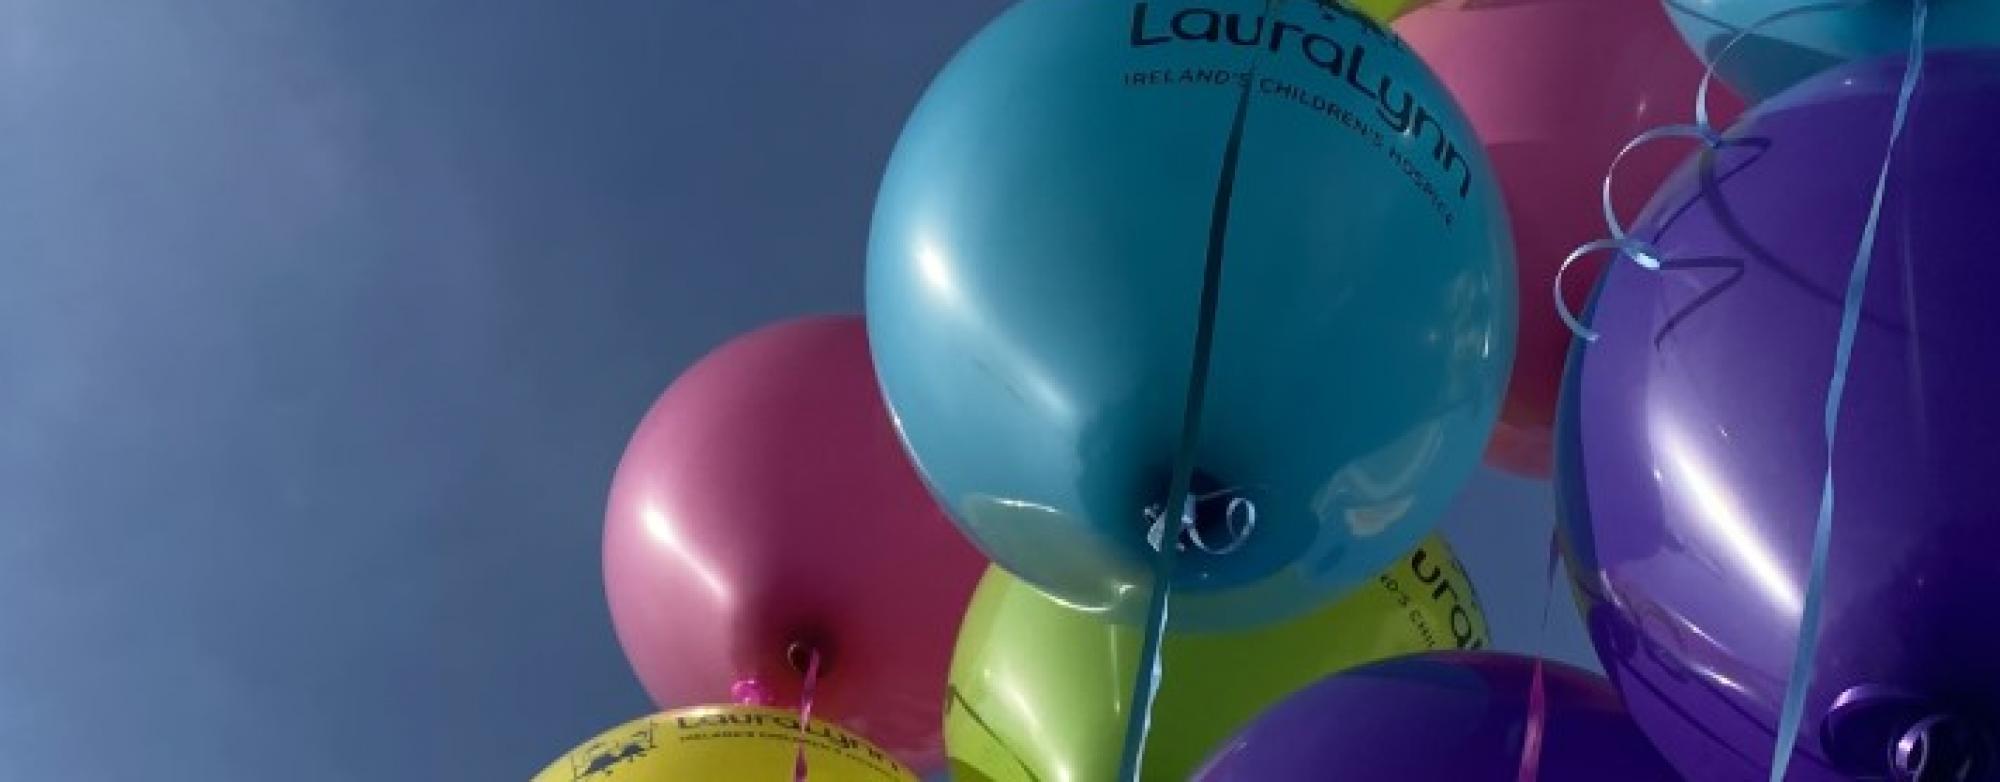 10th Birthday Balloons